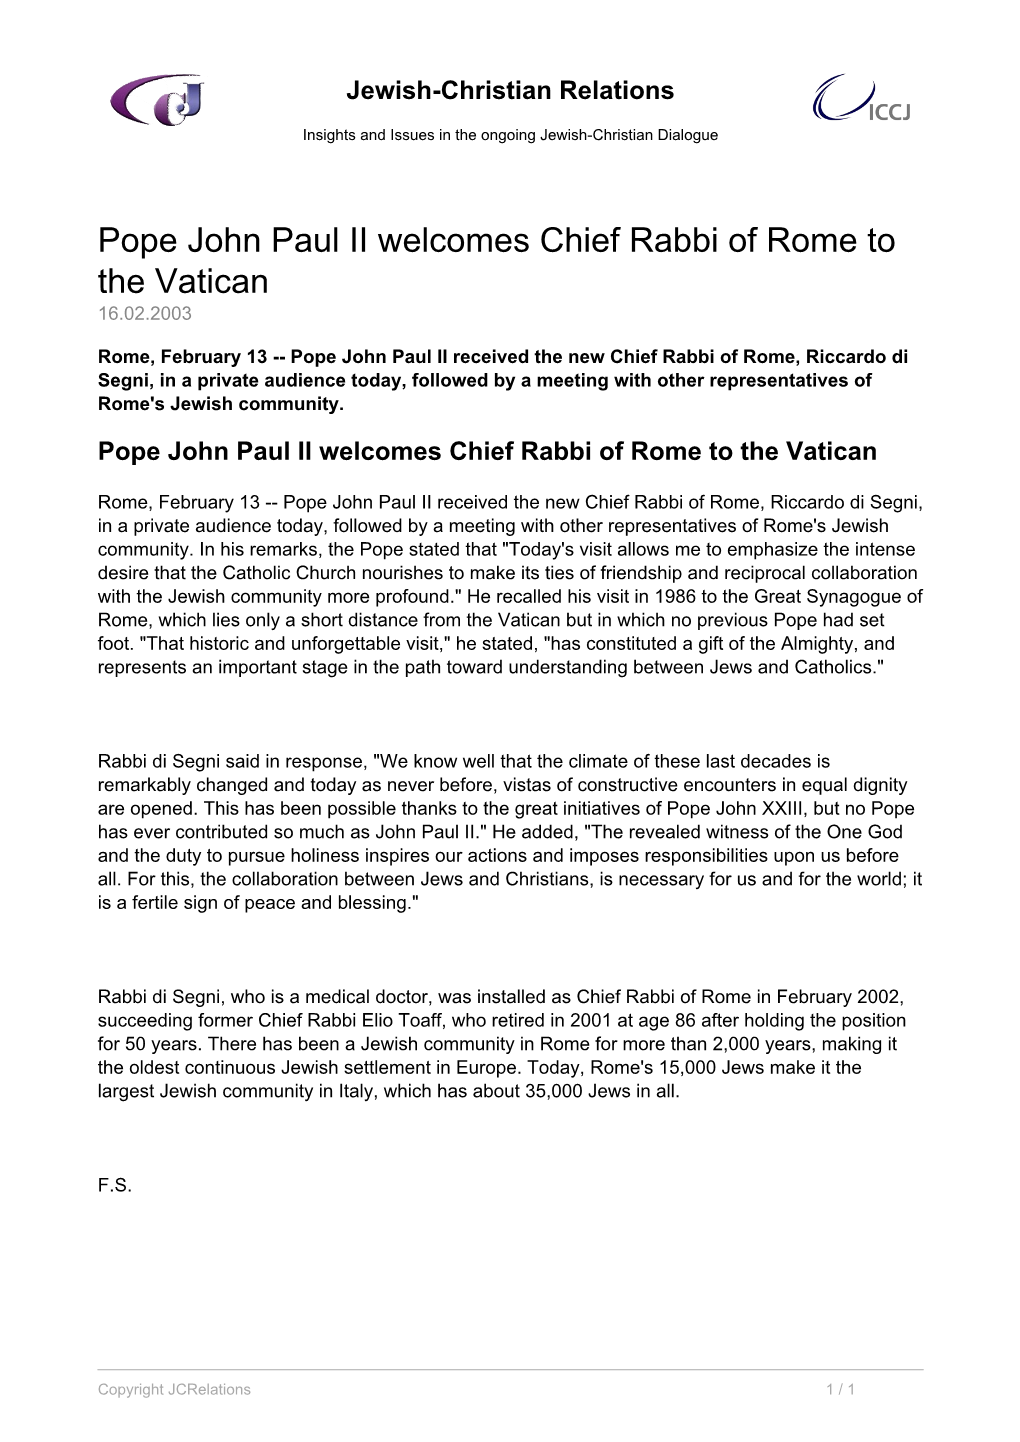 Pope John Paul II Welcomes Chief Rabbi of Rome to the Vatican 16.02.2003